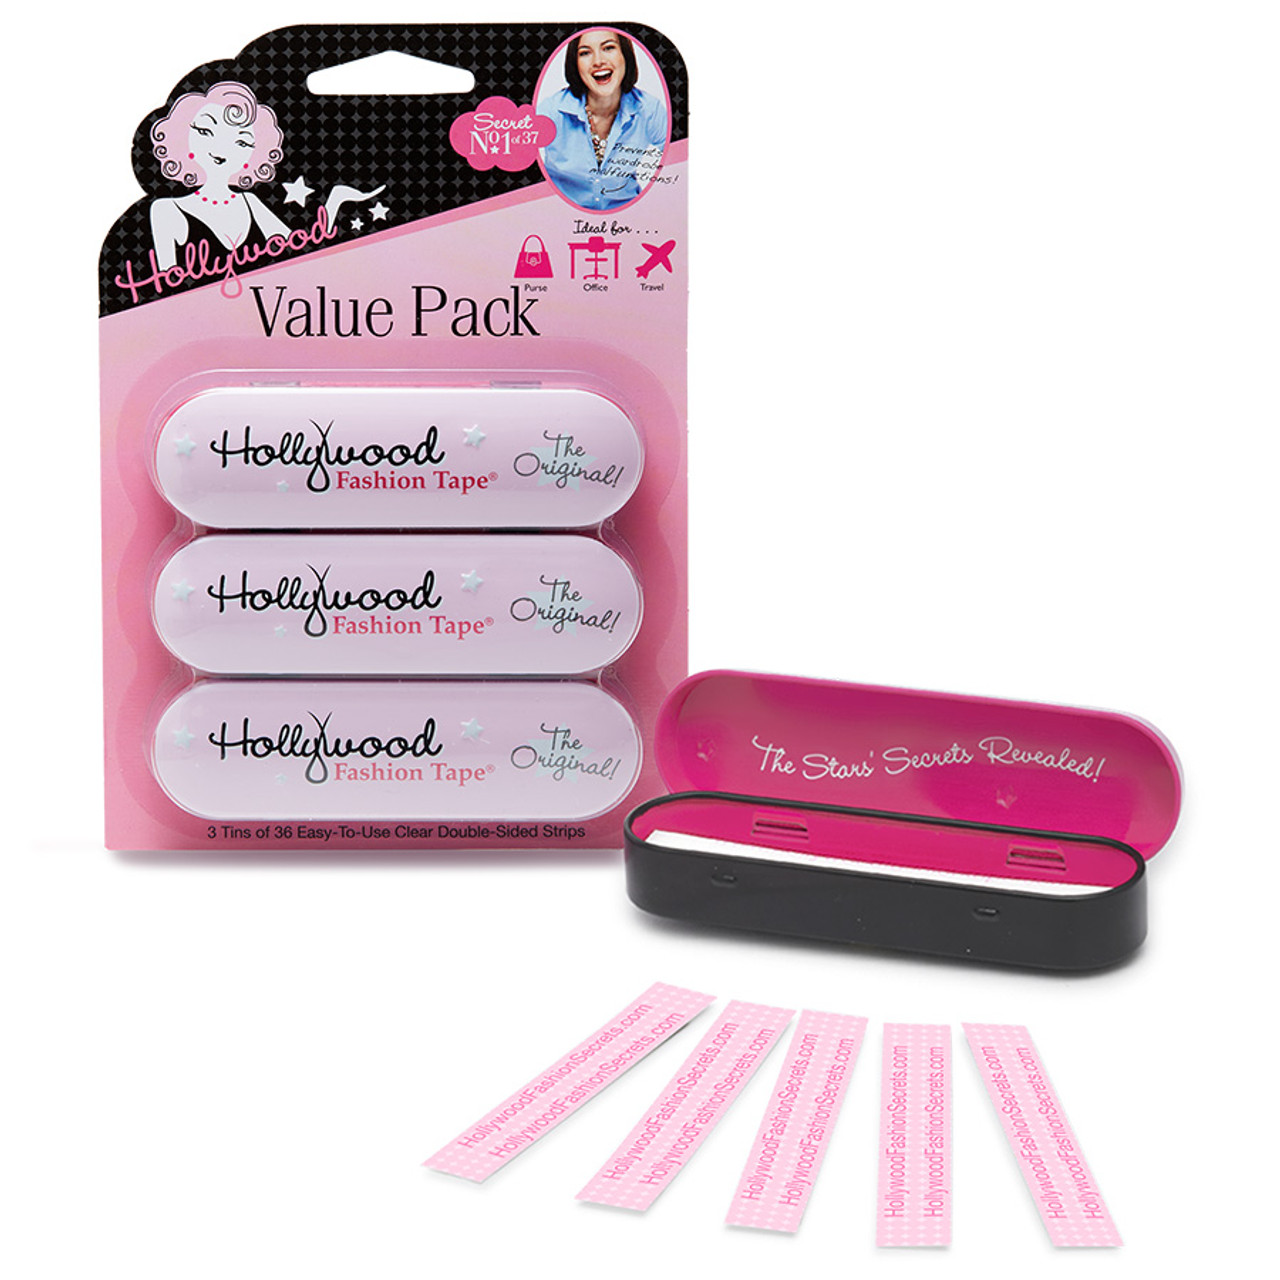 Hollywood Fashion Secrets Fashion Tape Value Pack - Norcostco, Inc.